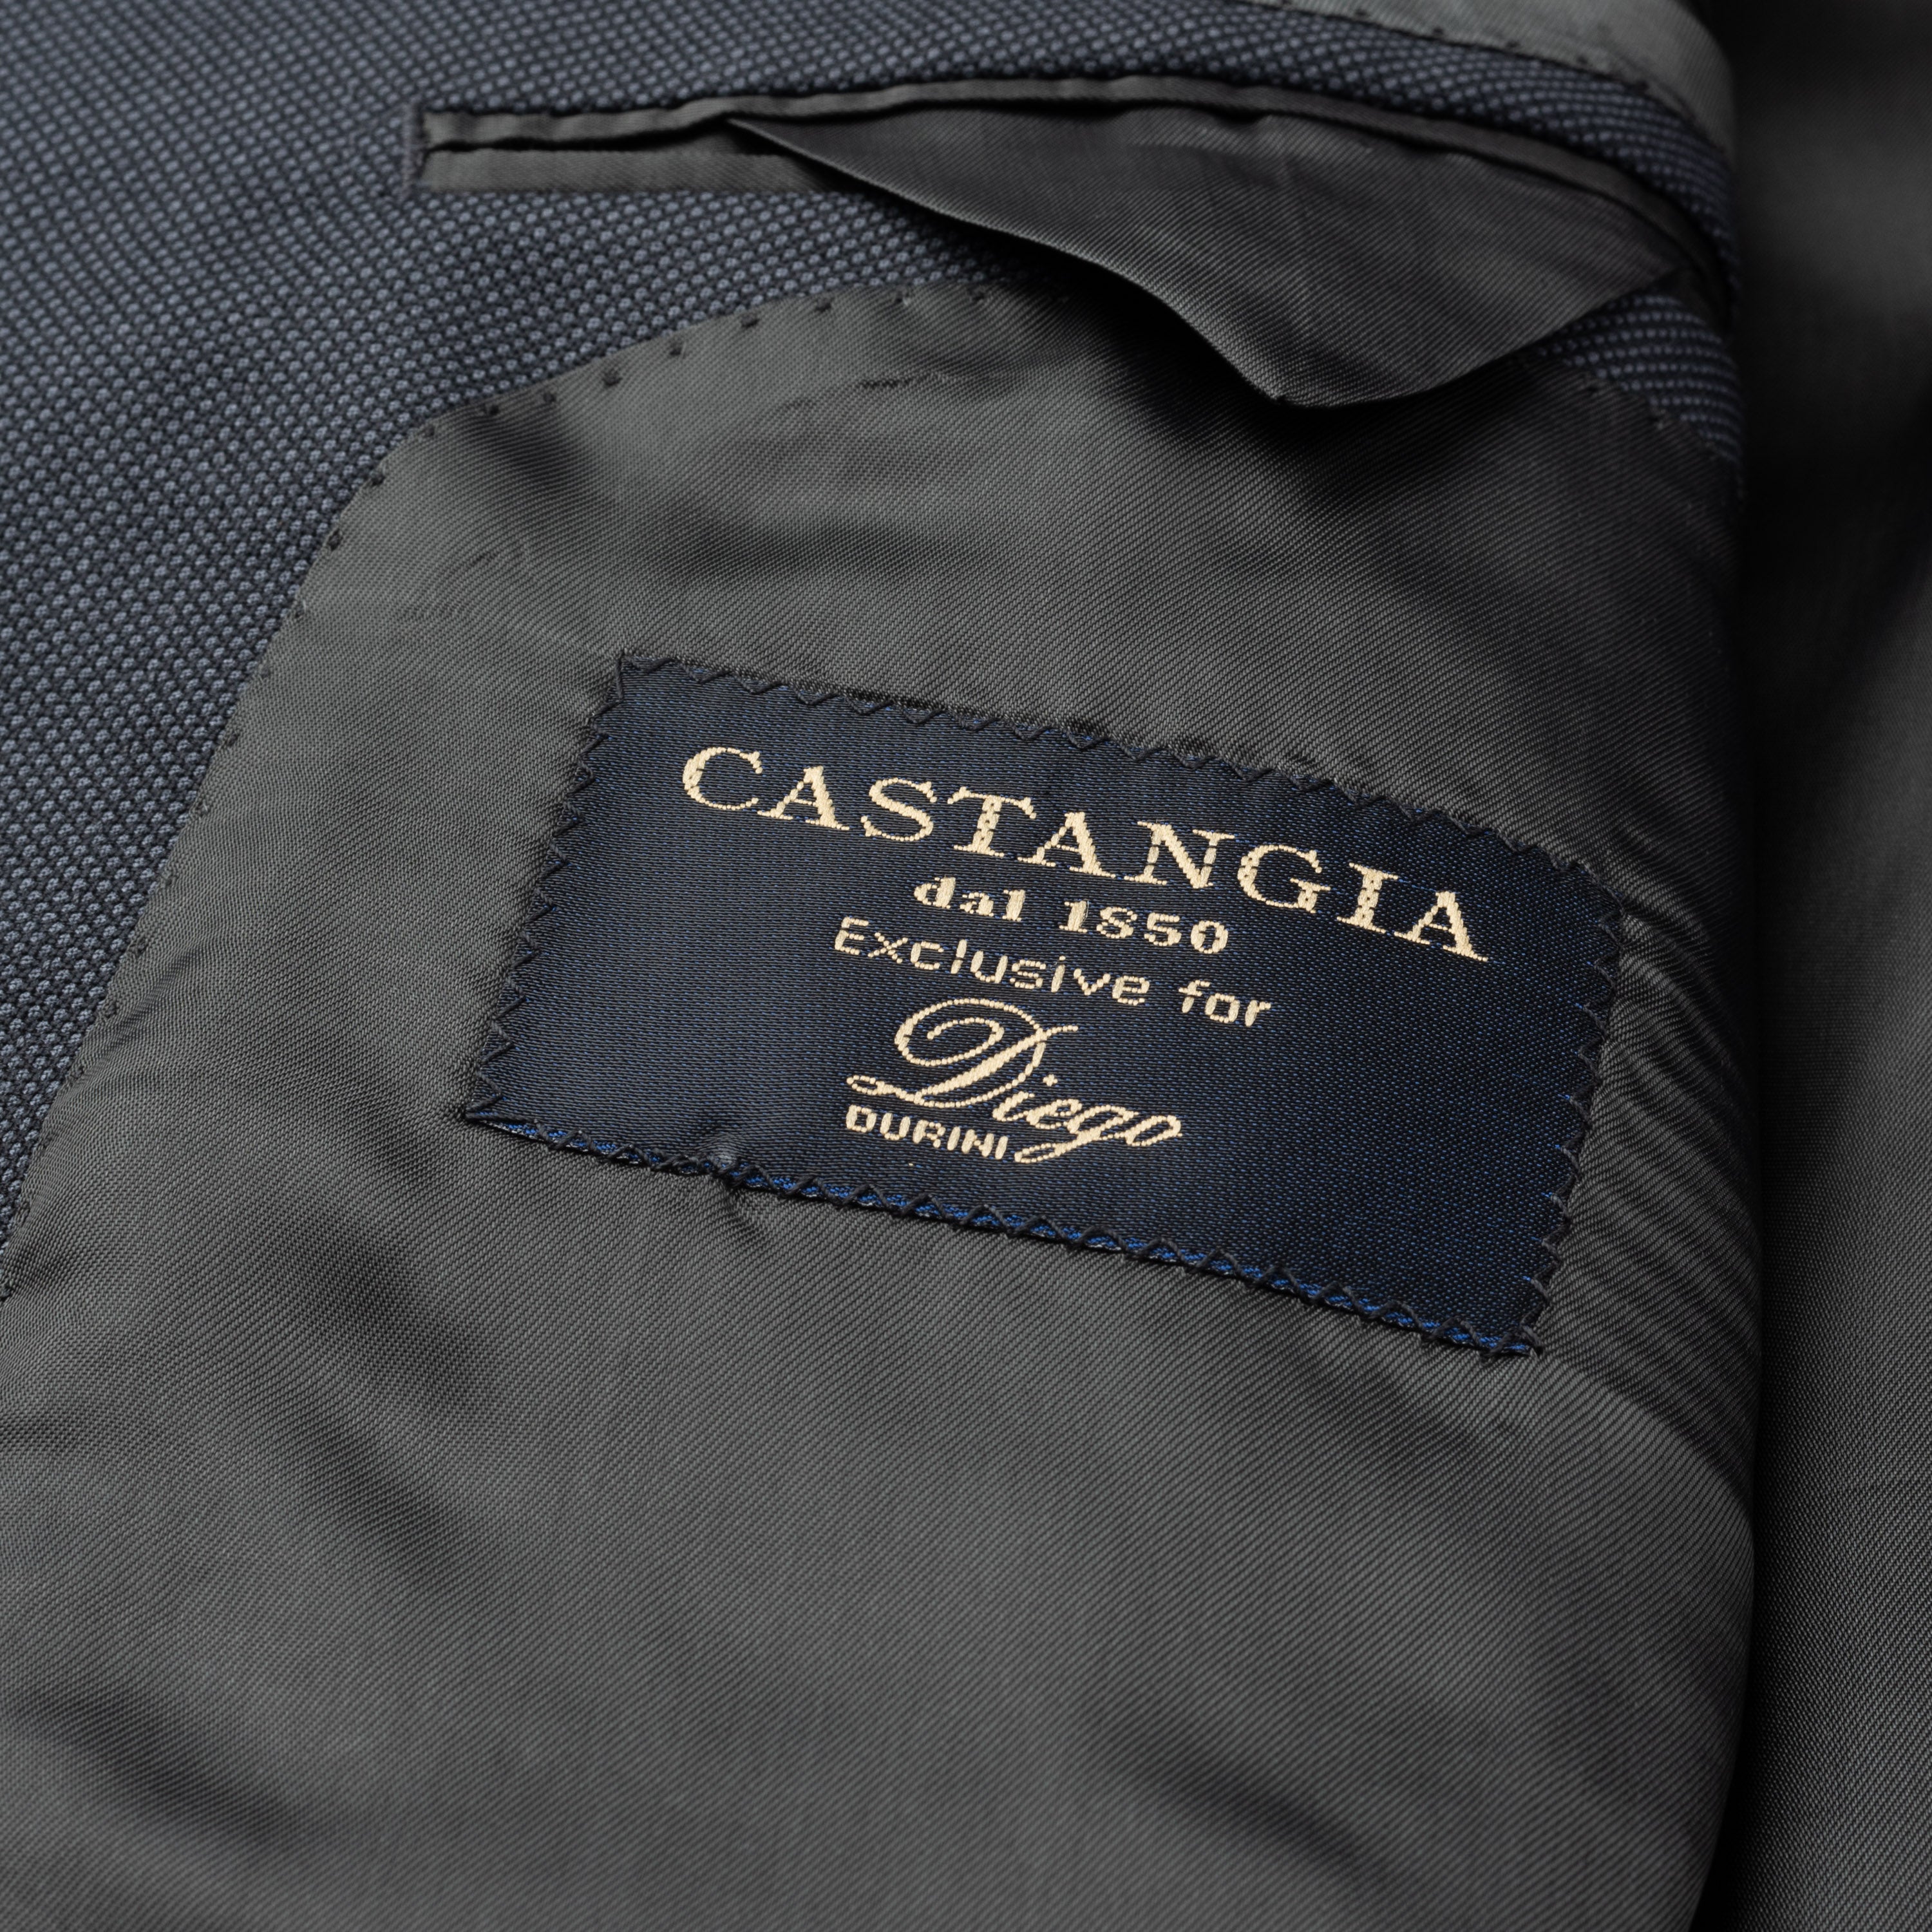 CASTANGIA 1850 for DIEGO DURINI Dark Gray Wool Jacket EU 48 NEW US 38 CASTANGIA